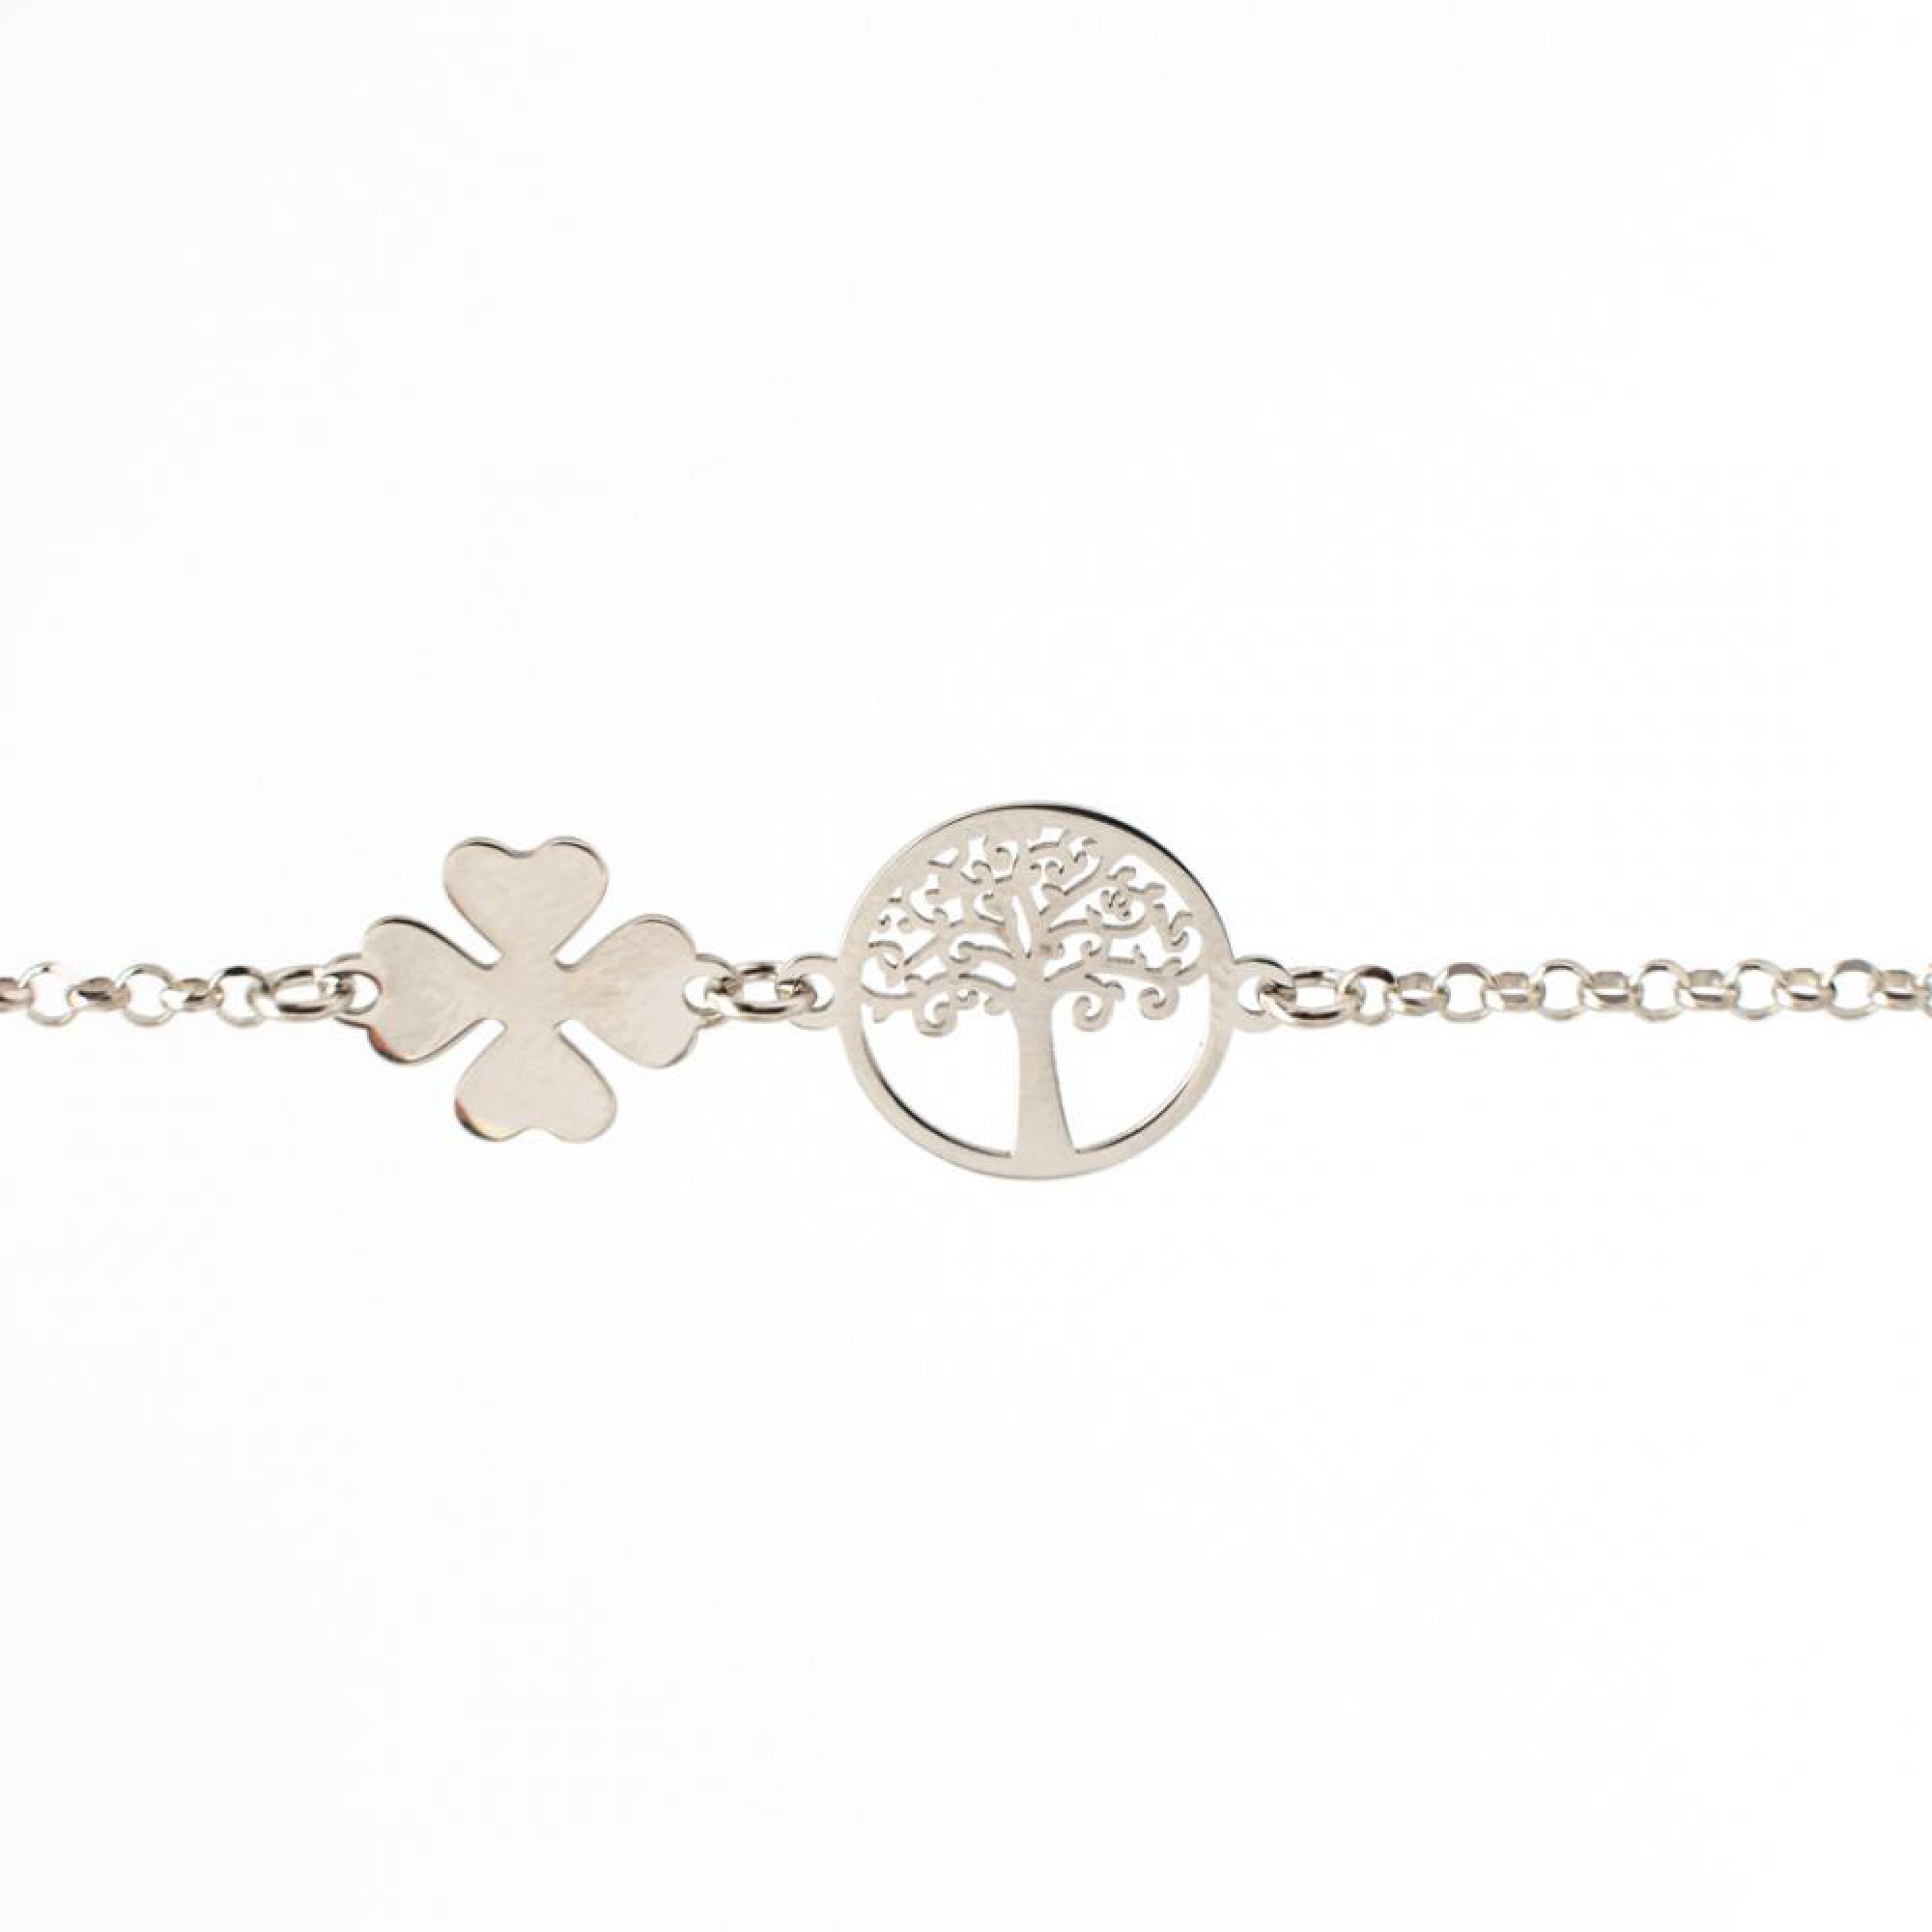 Tree of life bracelet with a four leaf clover